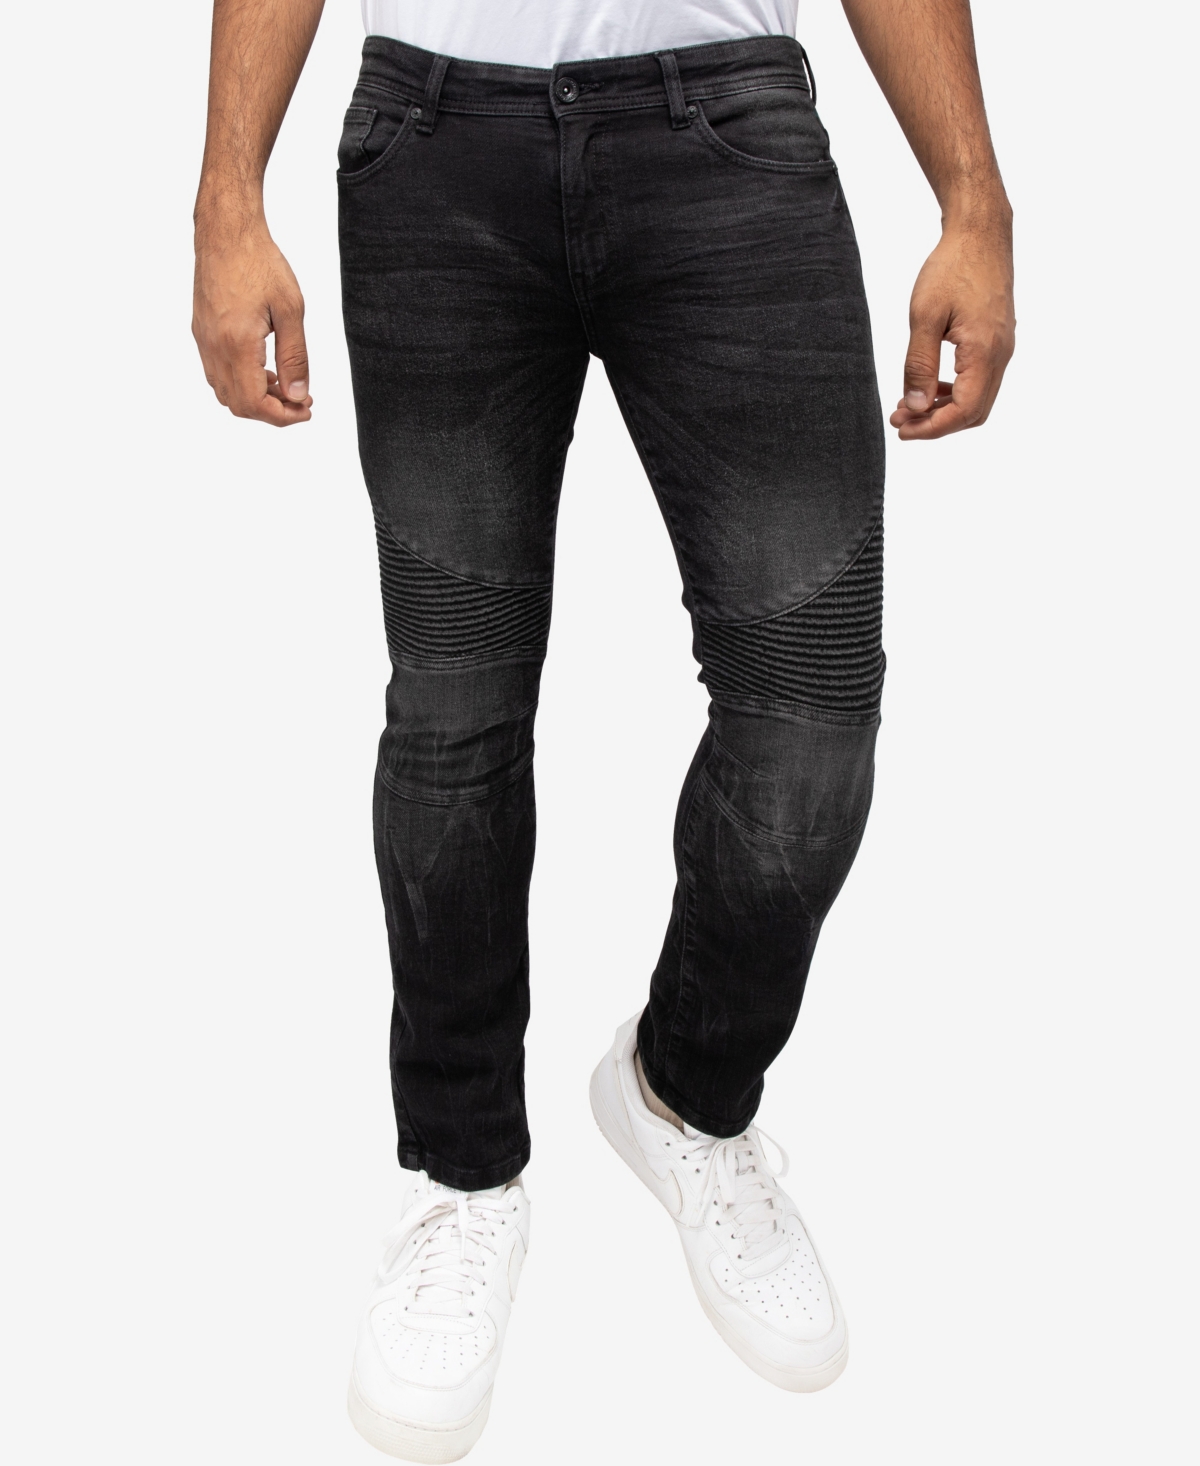 Men's Moto Slim Fit Jeans - Black Wash